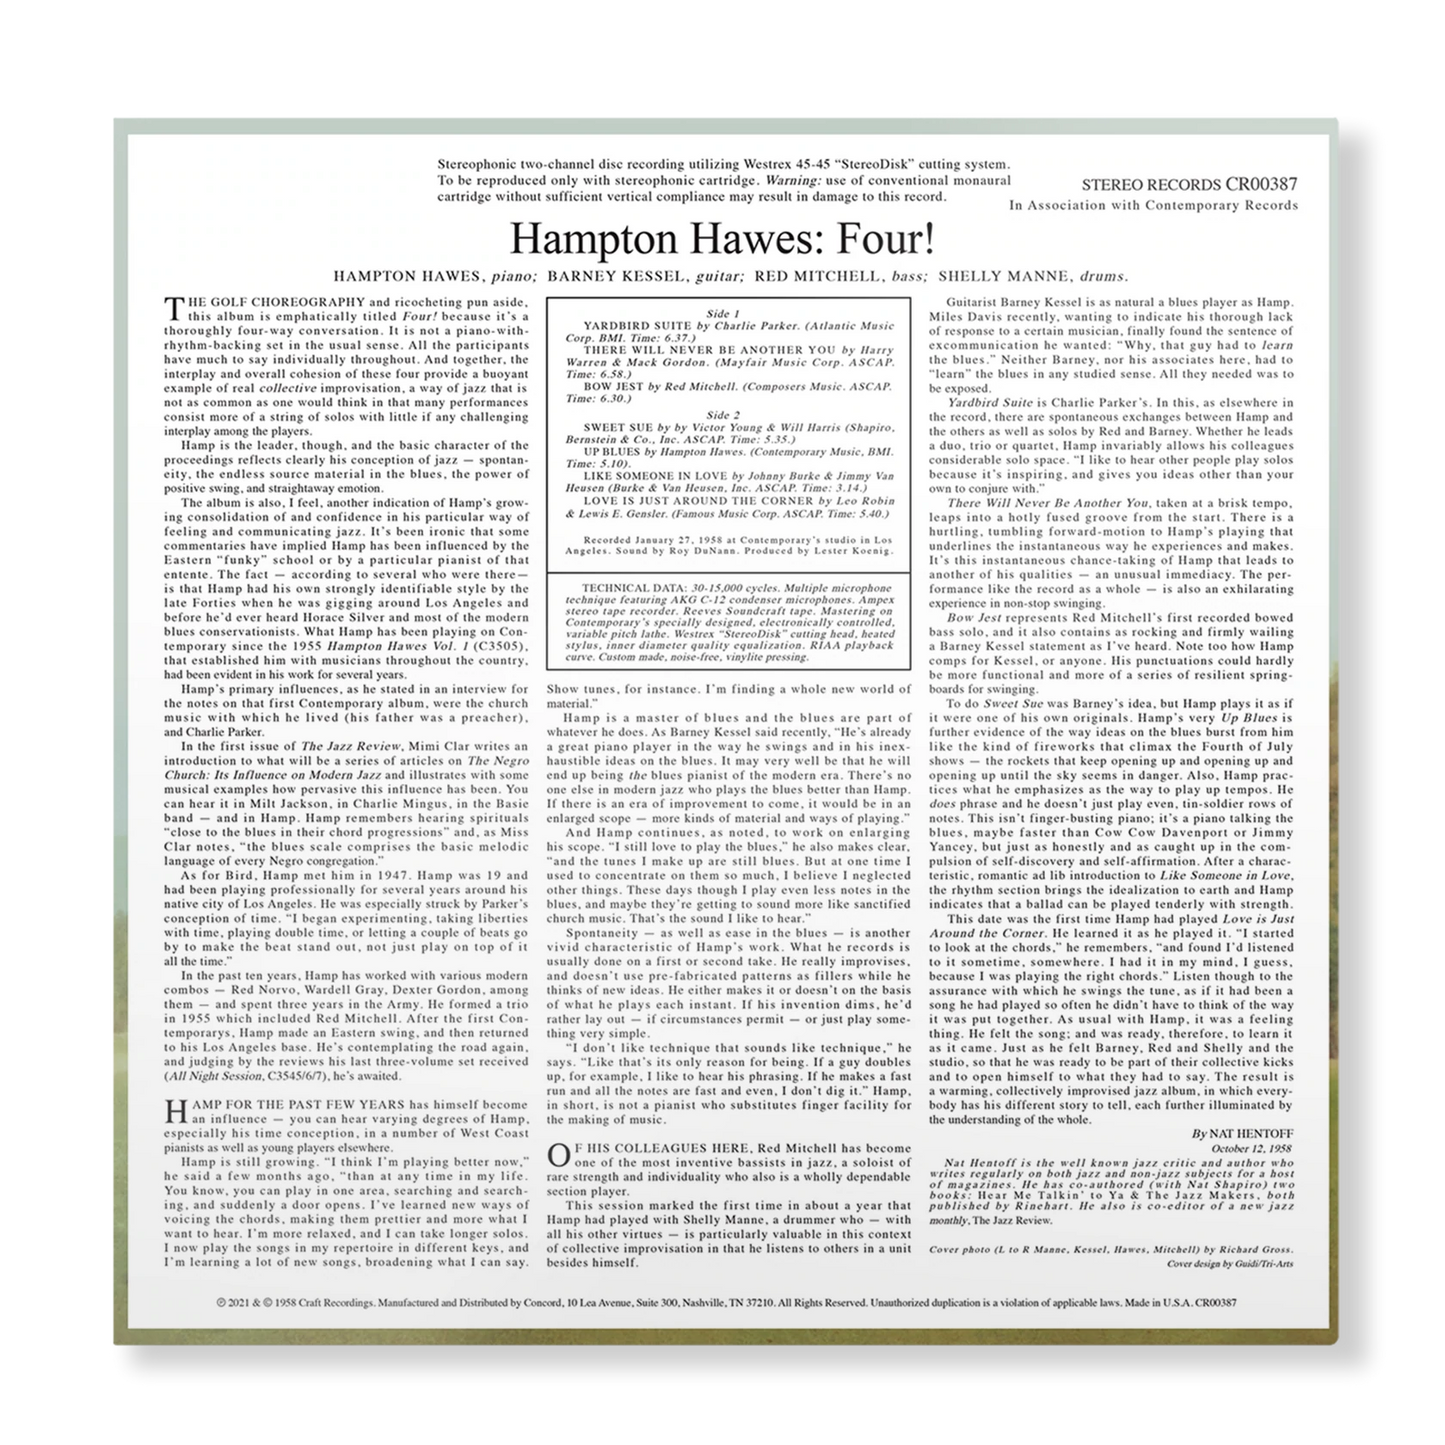 Hampton Hawes - ¡Cuatro! Con Barney Kessel, Shelly Manne y Red Mitchell - LP contemporáneo 